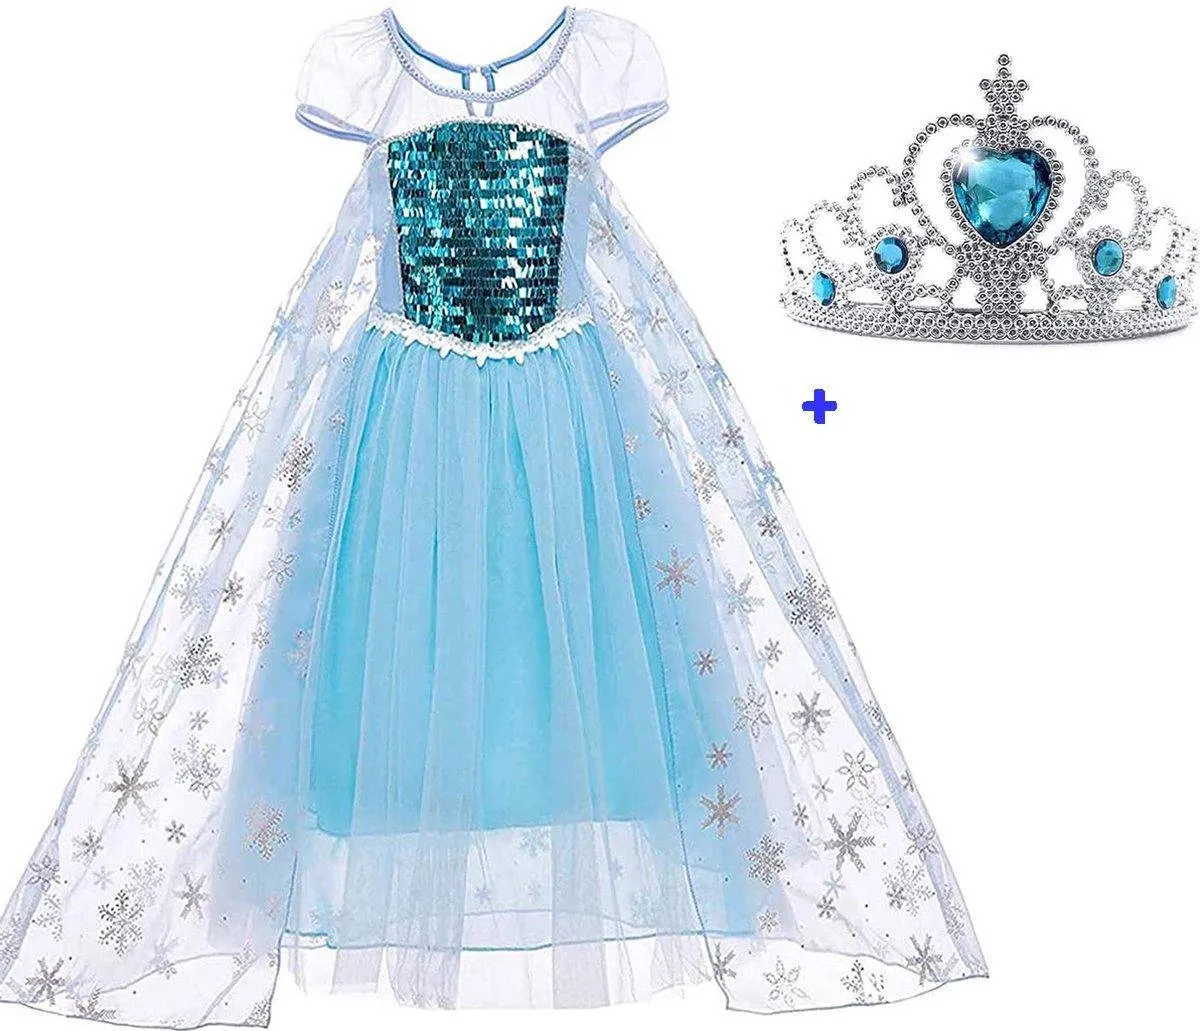 Prinsessenjurk meisje - Frozen jurk - Elsa -  Prinsessen Verkleedkleding 104/110 (110)  - Kroon (Tiara) speelgoed